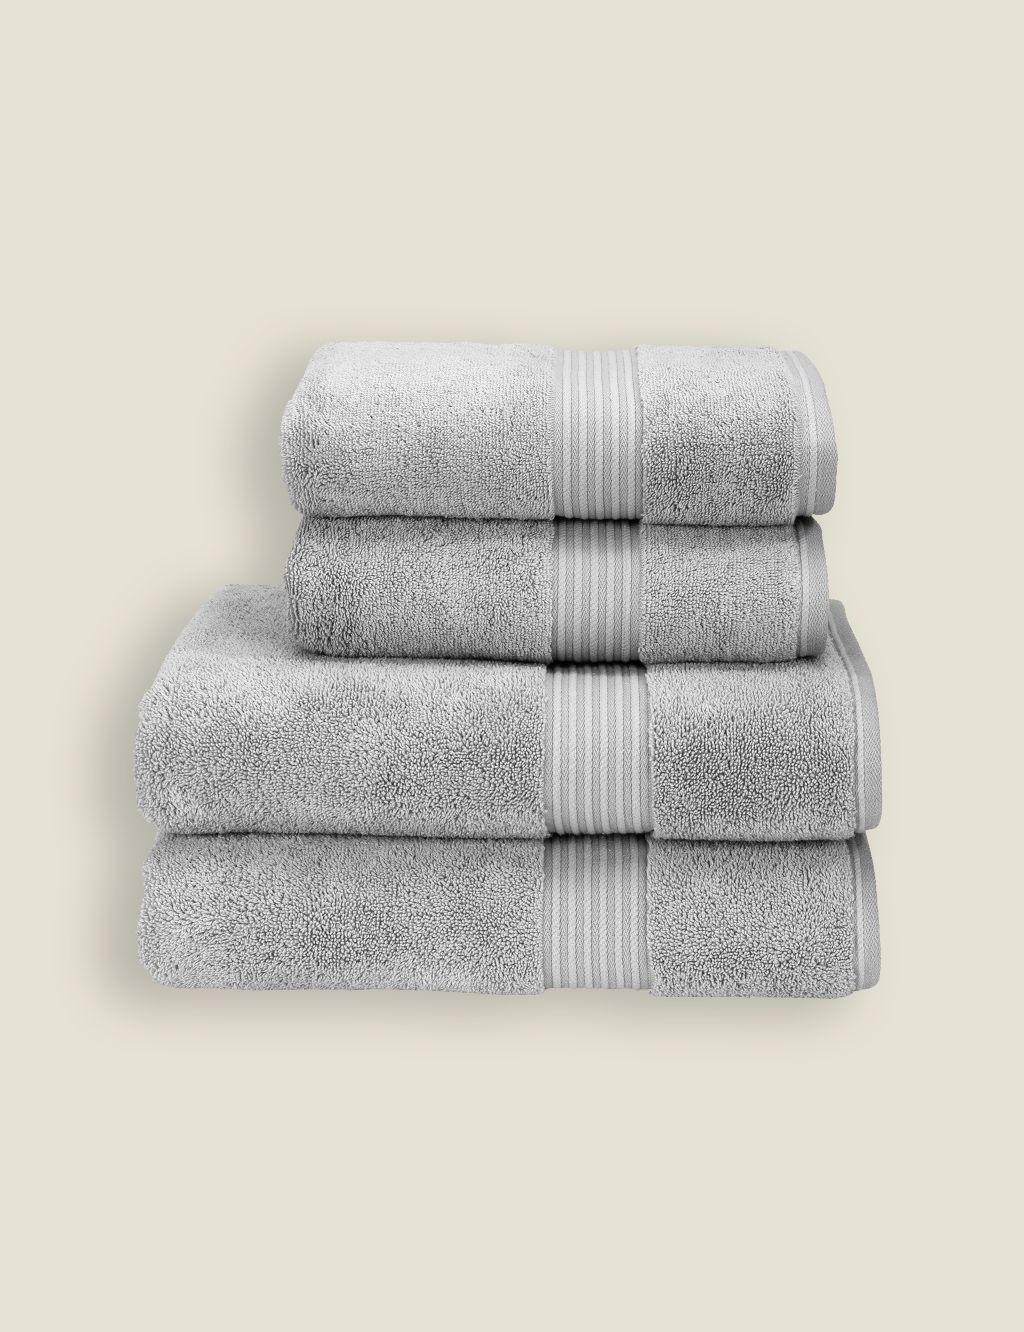 Supreme Hygro Towel image 2